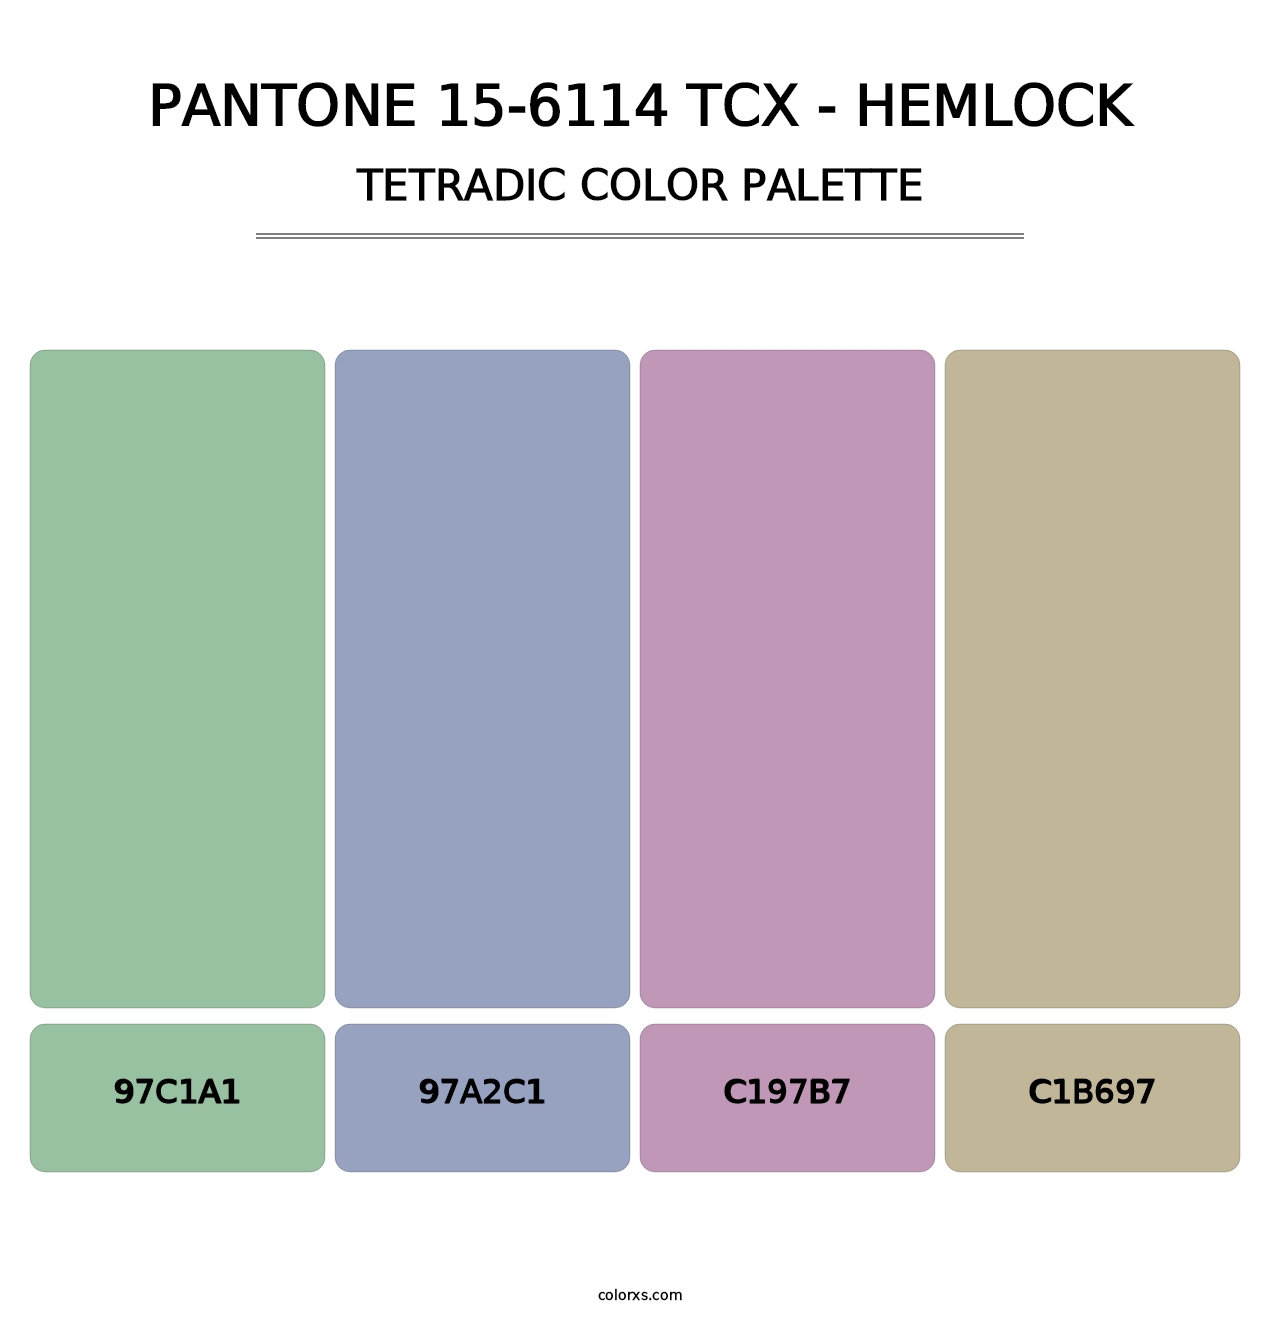 PANTONE 15-6114 TCX - Hemlock - Tetradic Color Palette